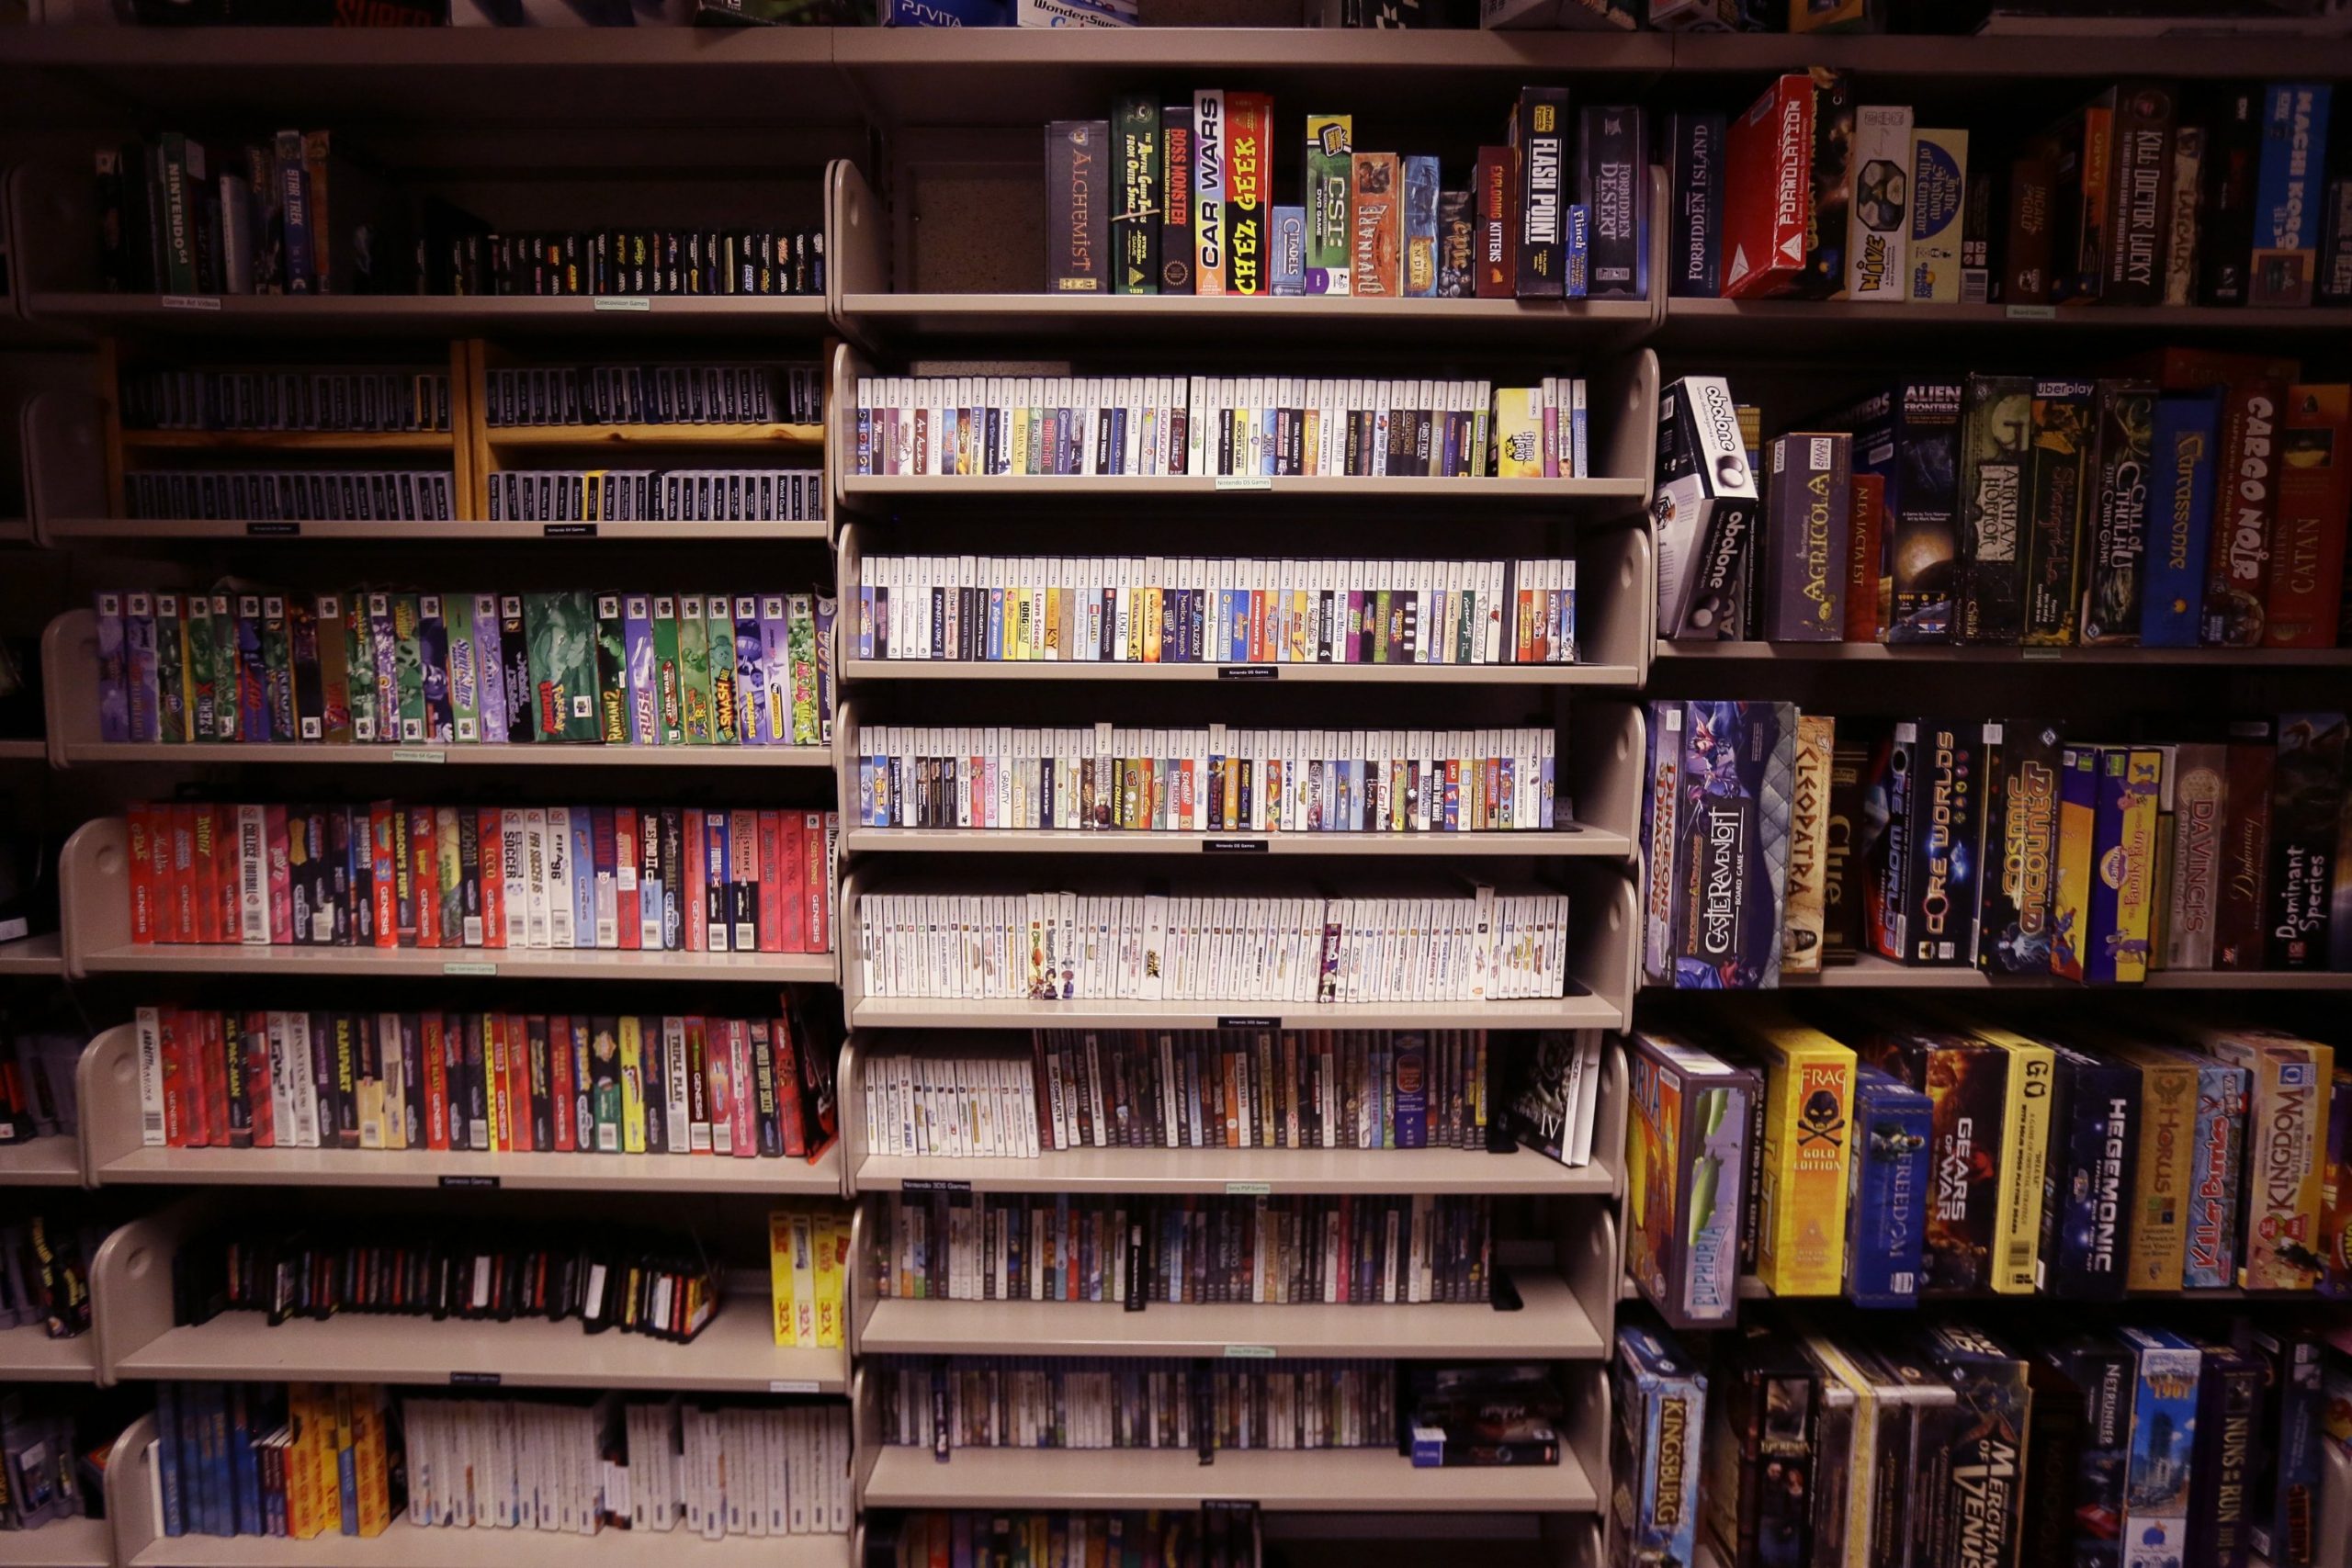 A shelf full of various video games. 